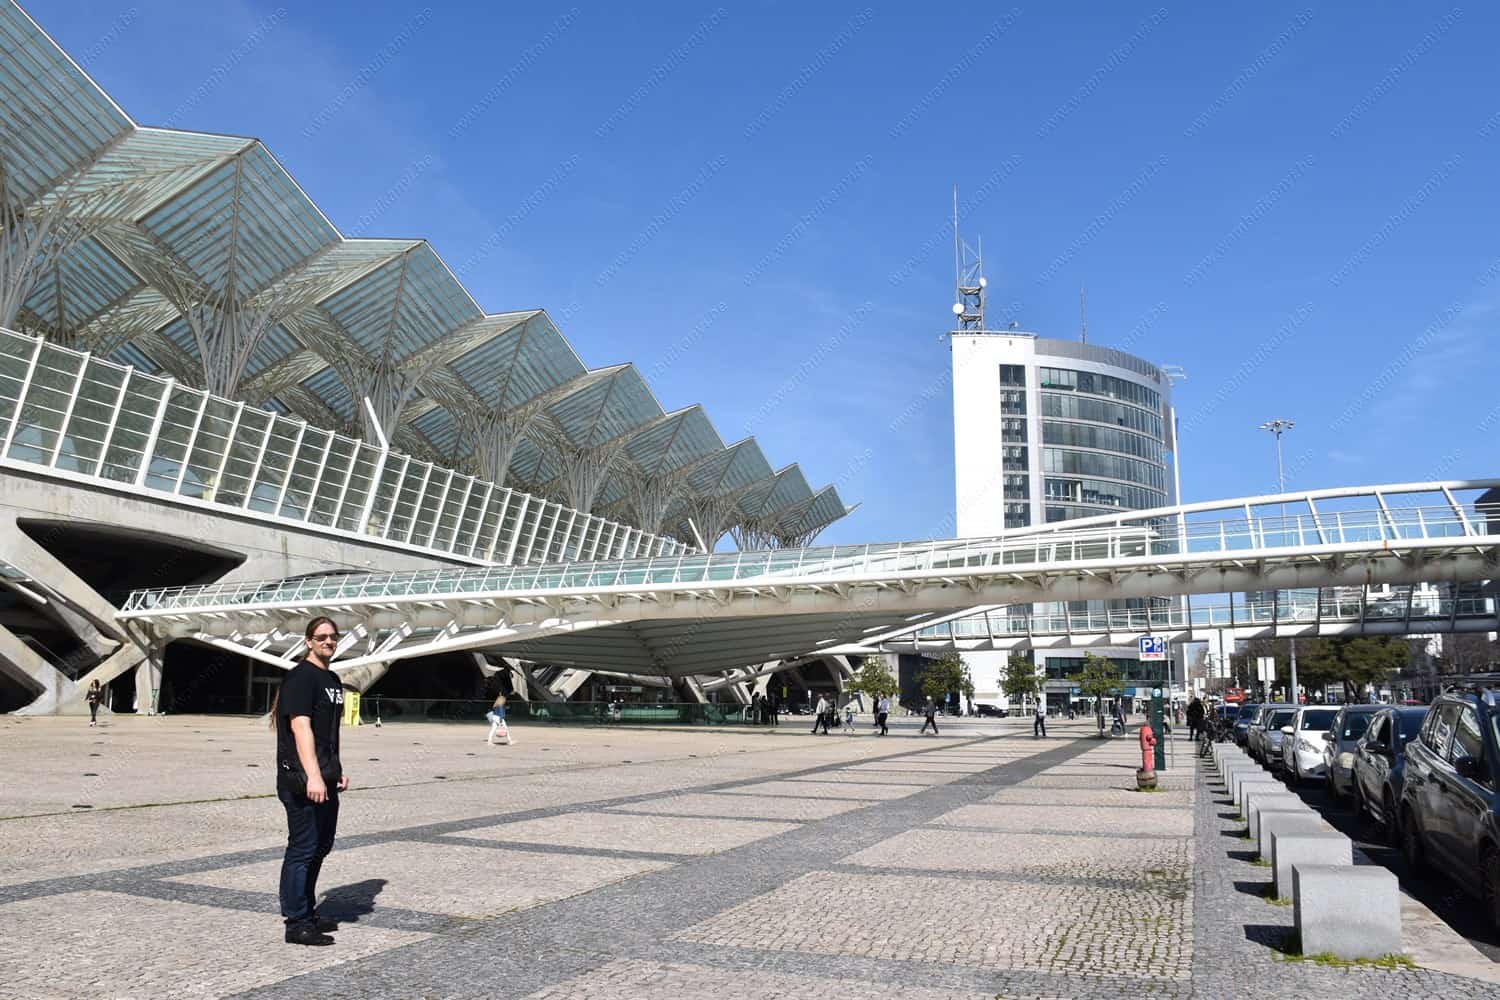 Estaçào do Oriente - Top Attractions to Visit in Lisbon 